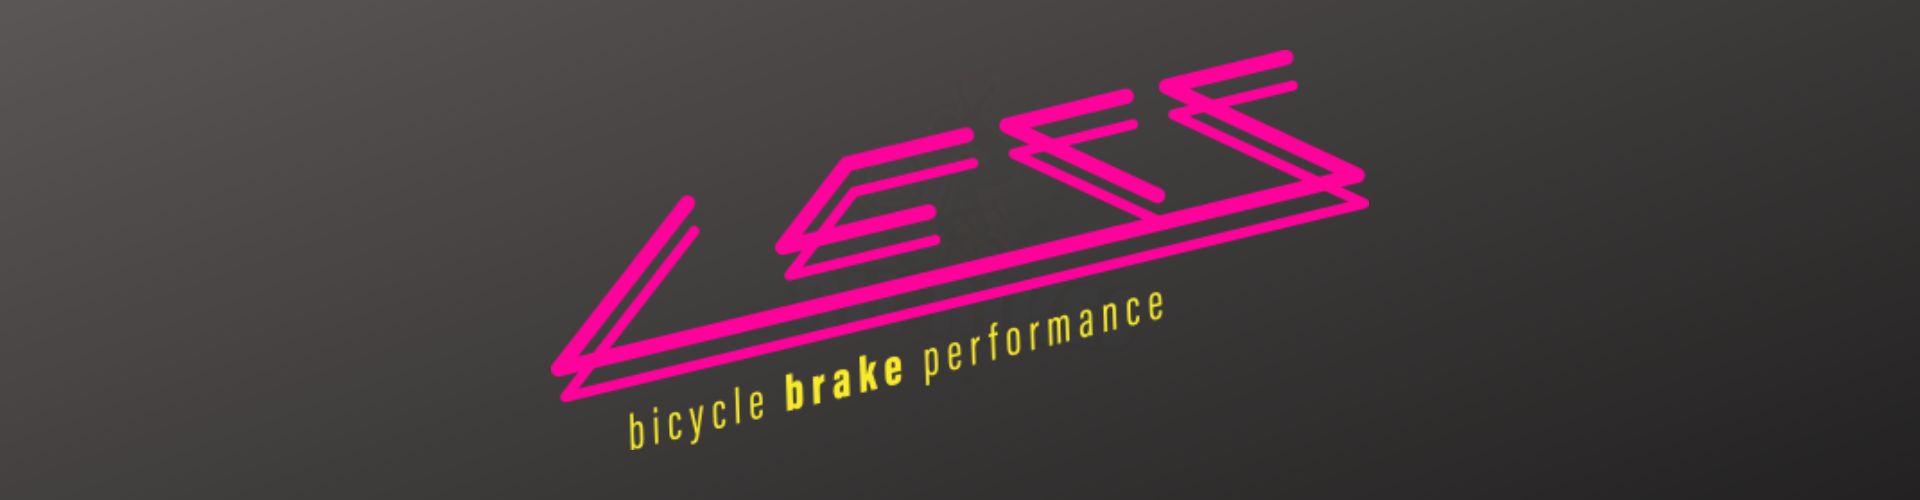 Less Brakes 